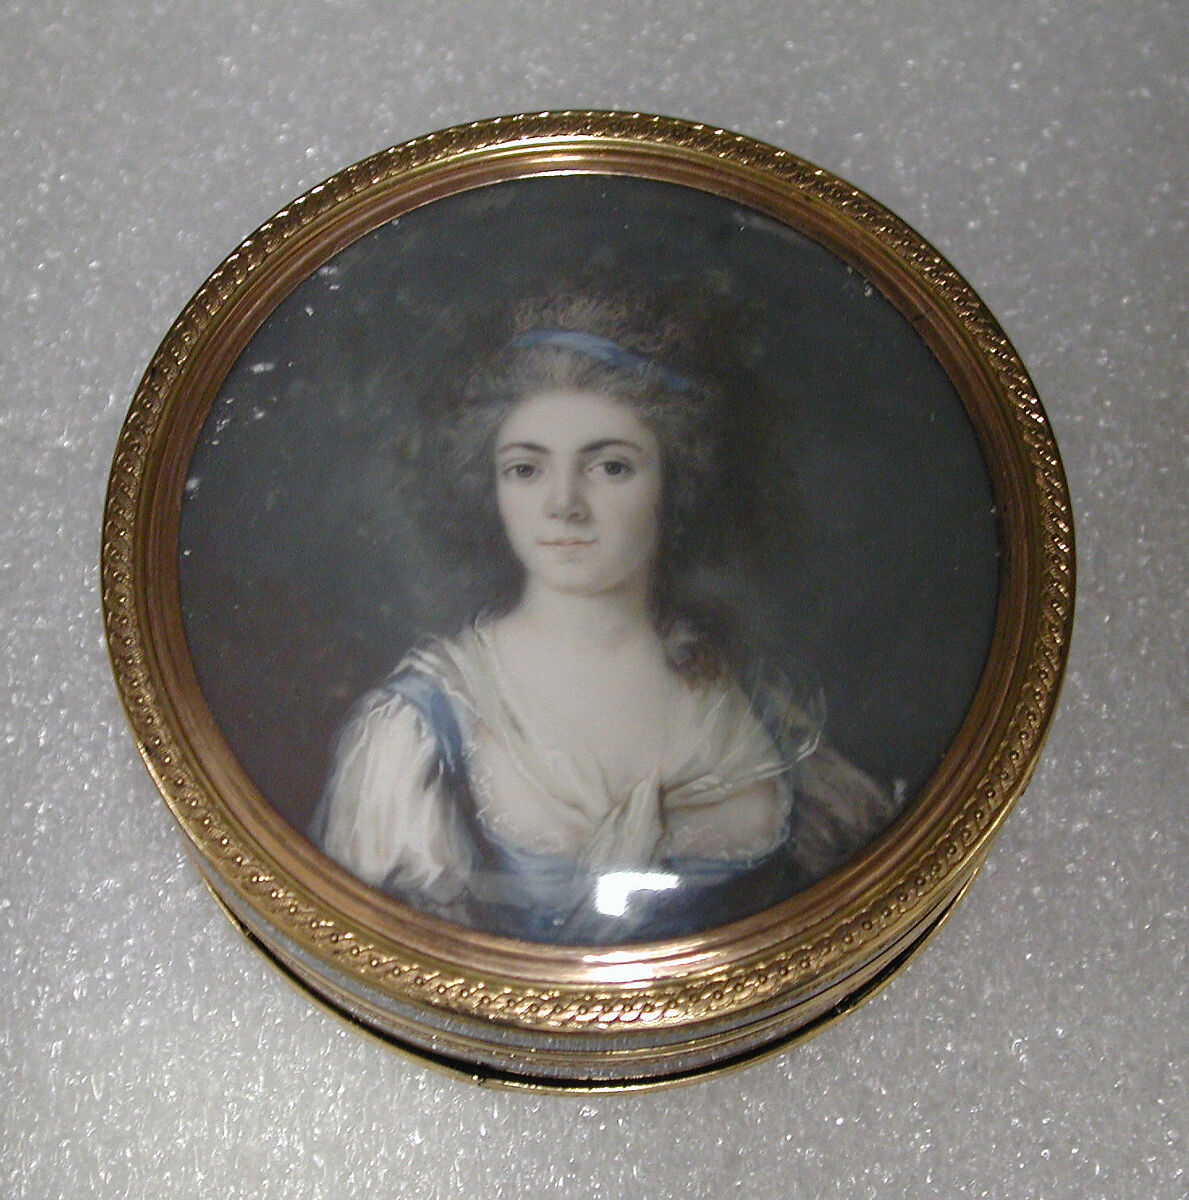 Box with portrait of a woman, said to be Princesse de Ligne, Jean-Baptiste Gillet (1709–1786, master 1734), Tortoiseshell, gold, ivory, French, Paris 